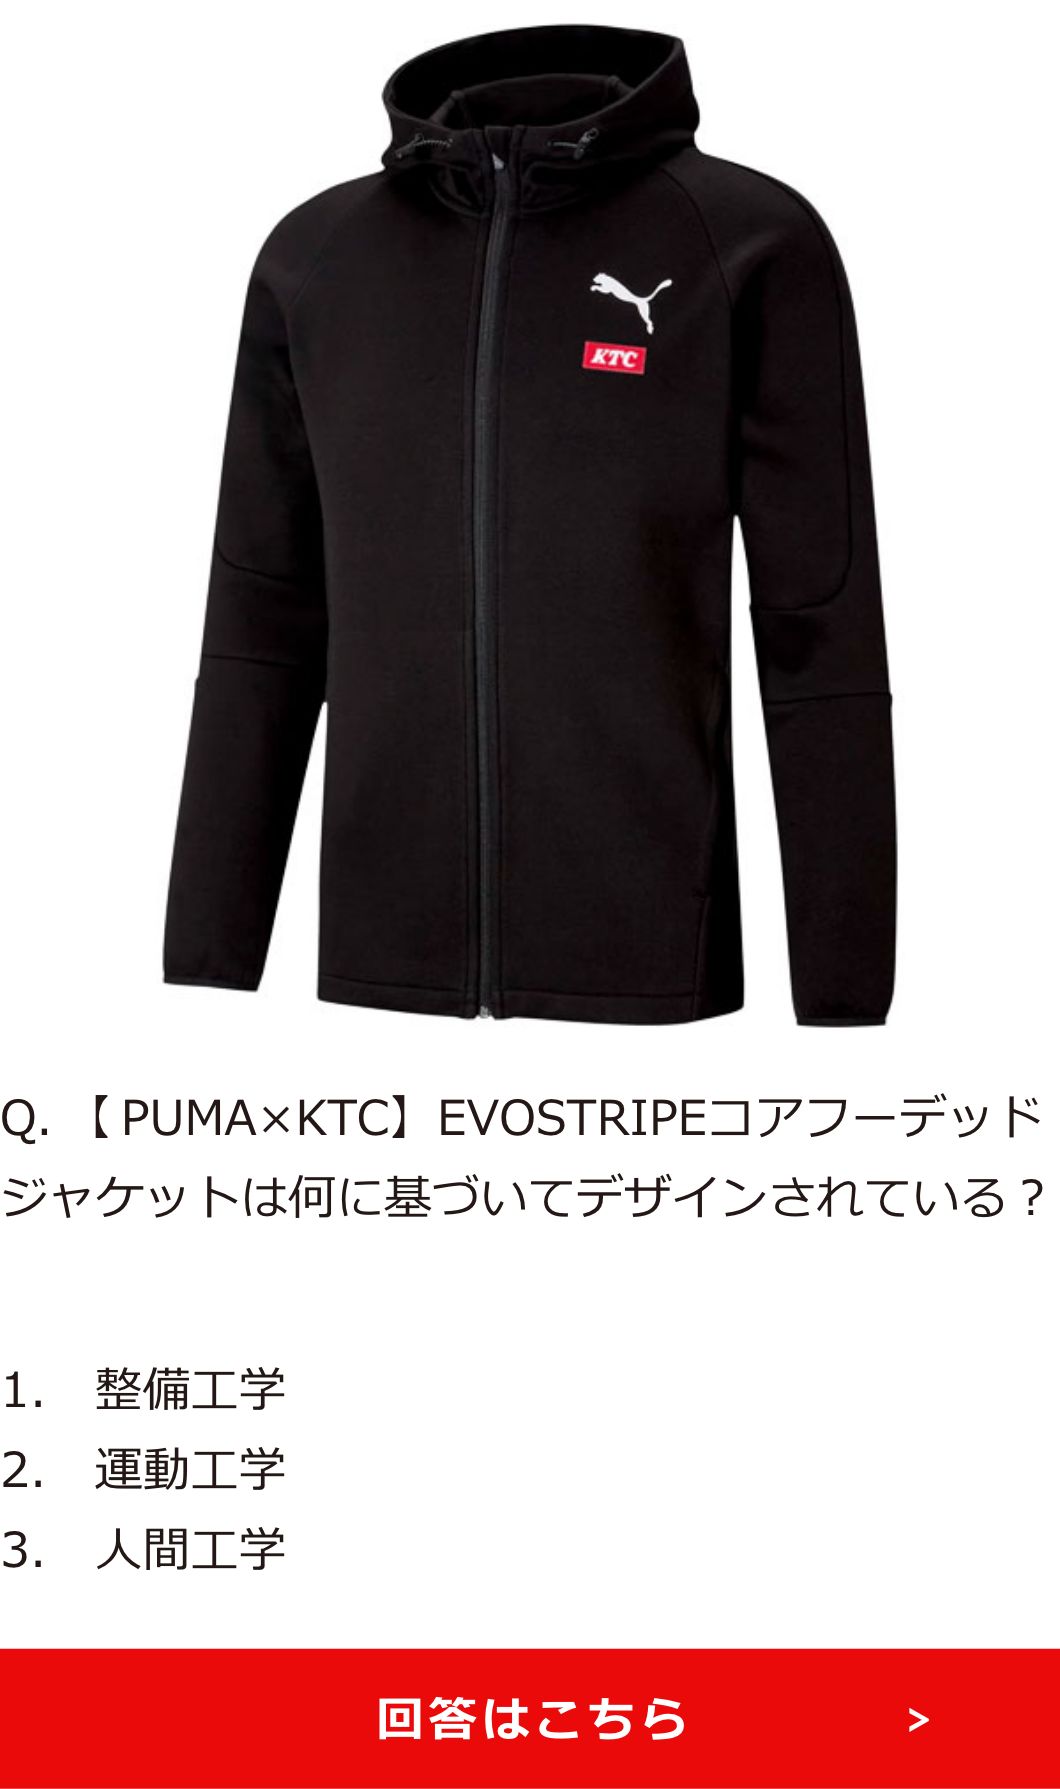 Q.　【PUMA×KTC】EVOSTRIPEコアフーデッドジャケットは何に基づいてデザインされている？